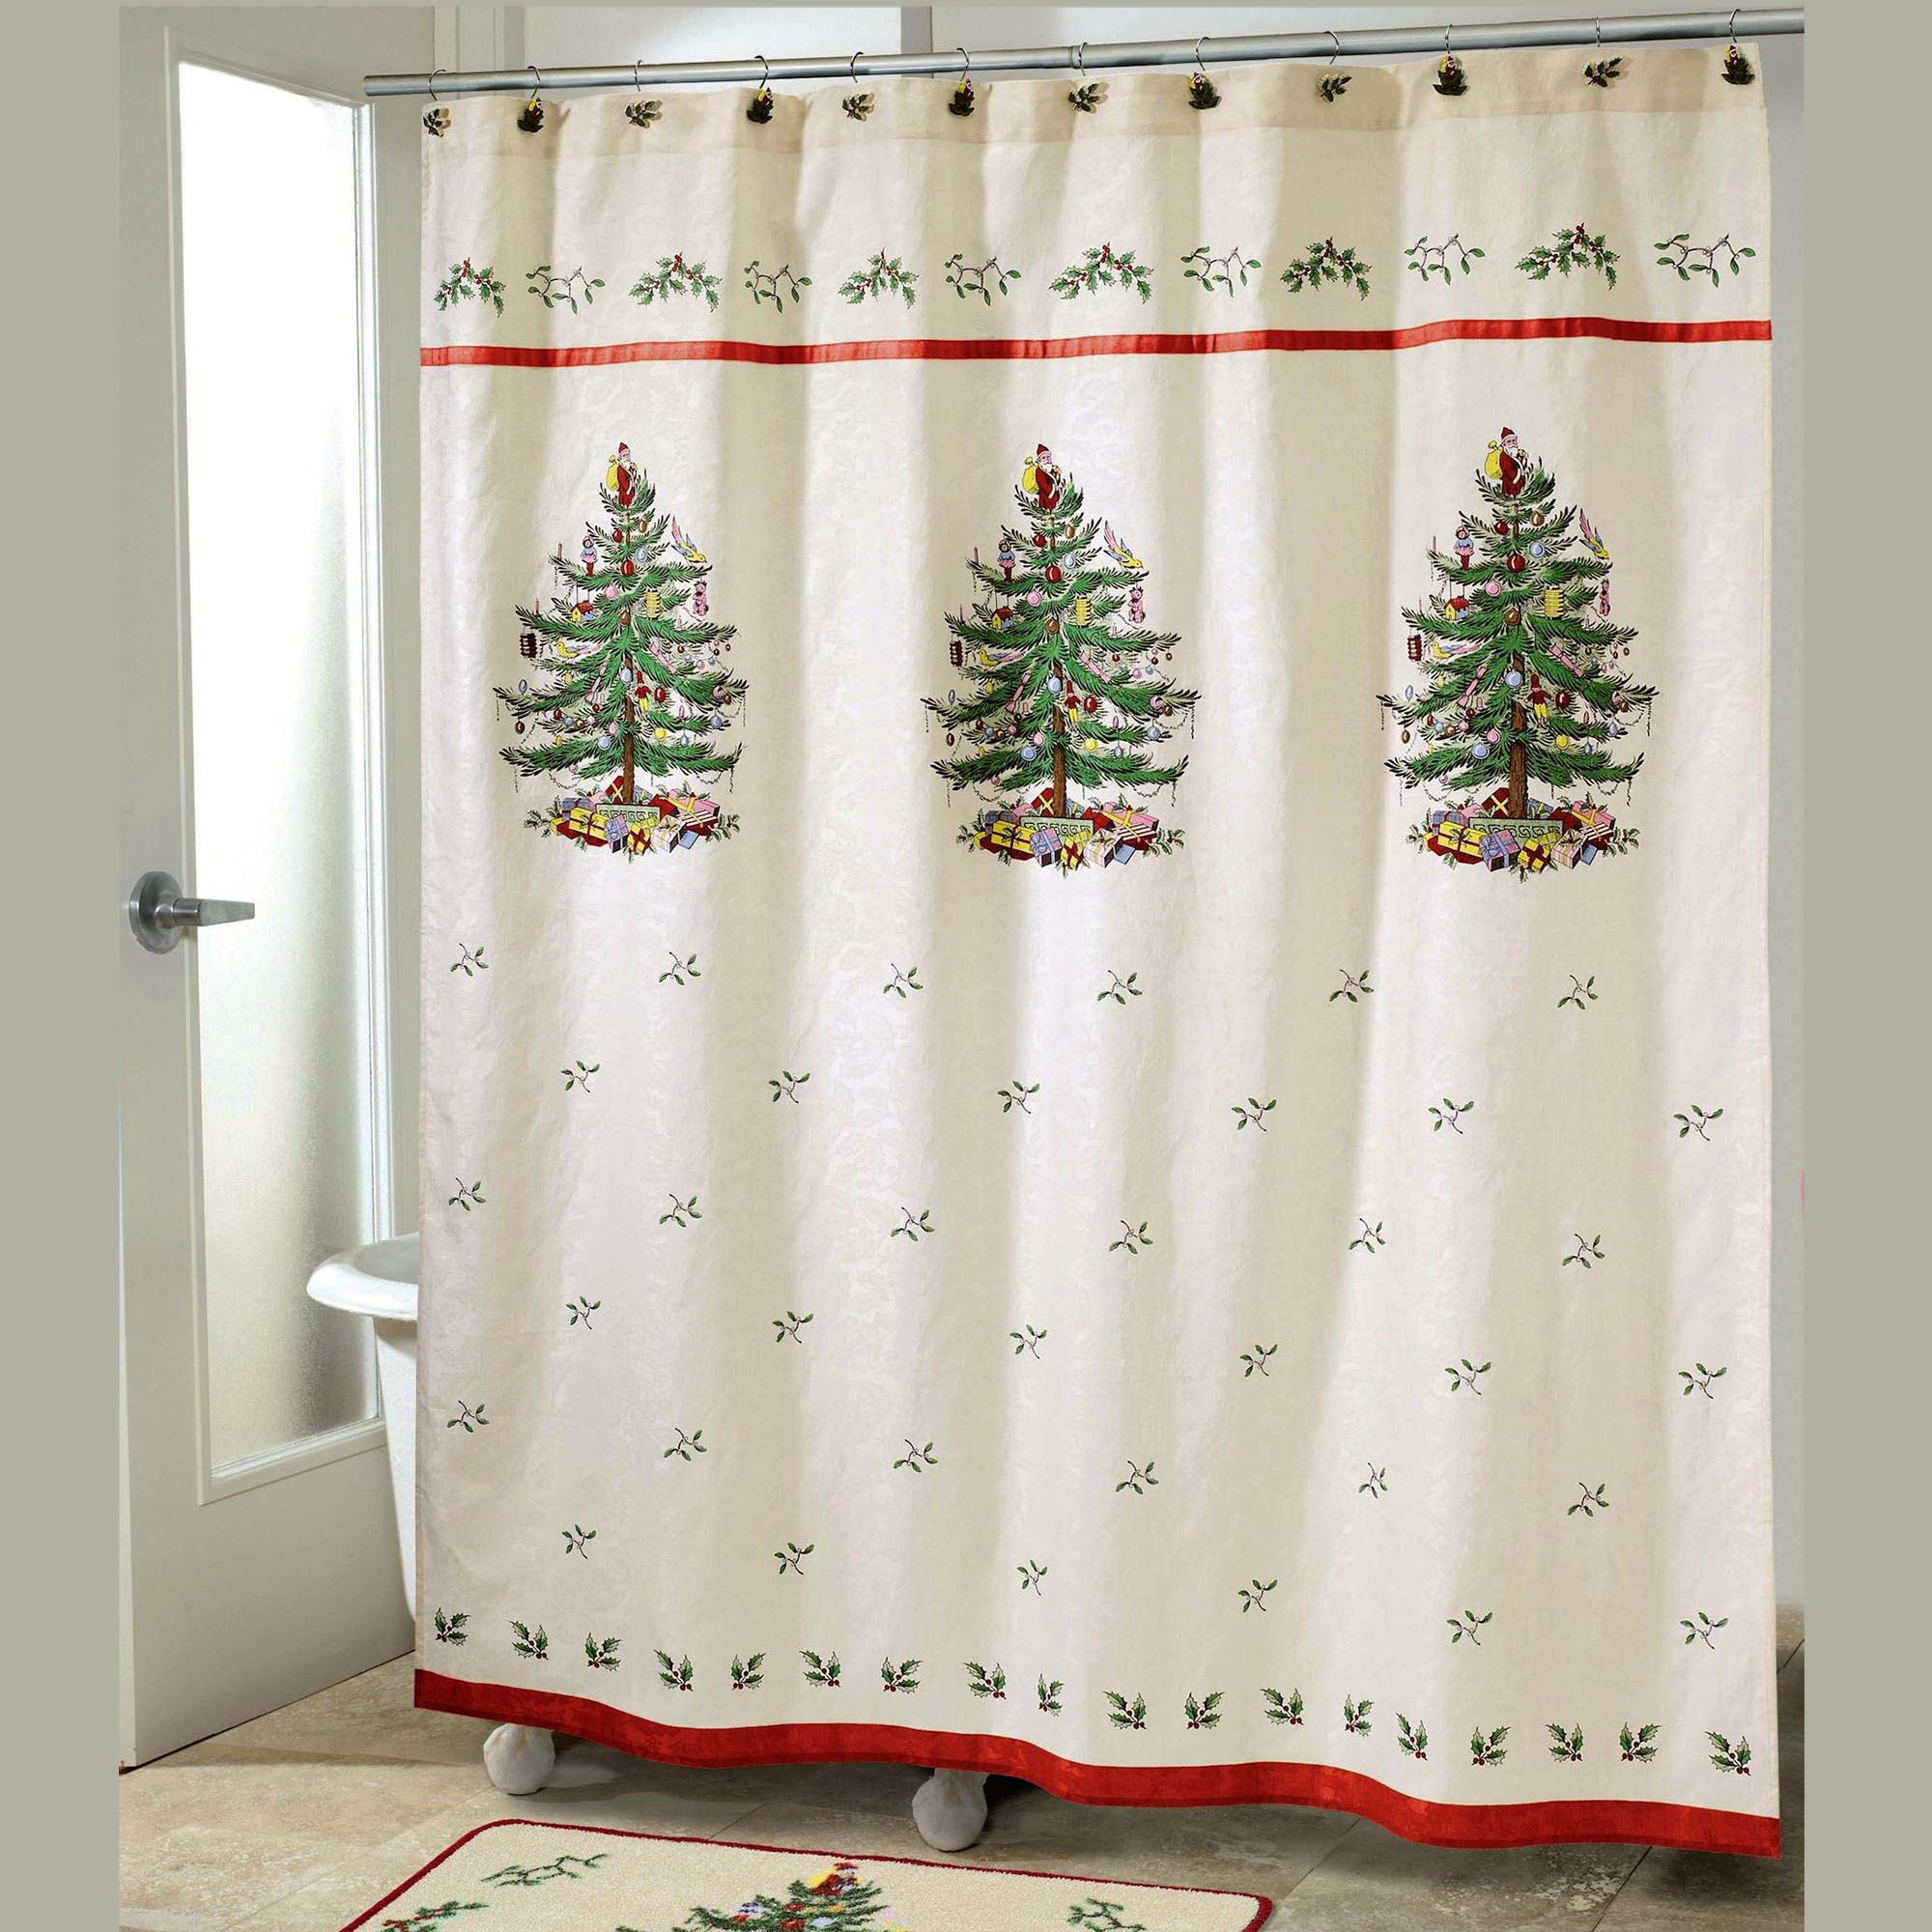 Christmas Bathroom Shower Curtains
 Spode Christmas Tree Shower Curtain